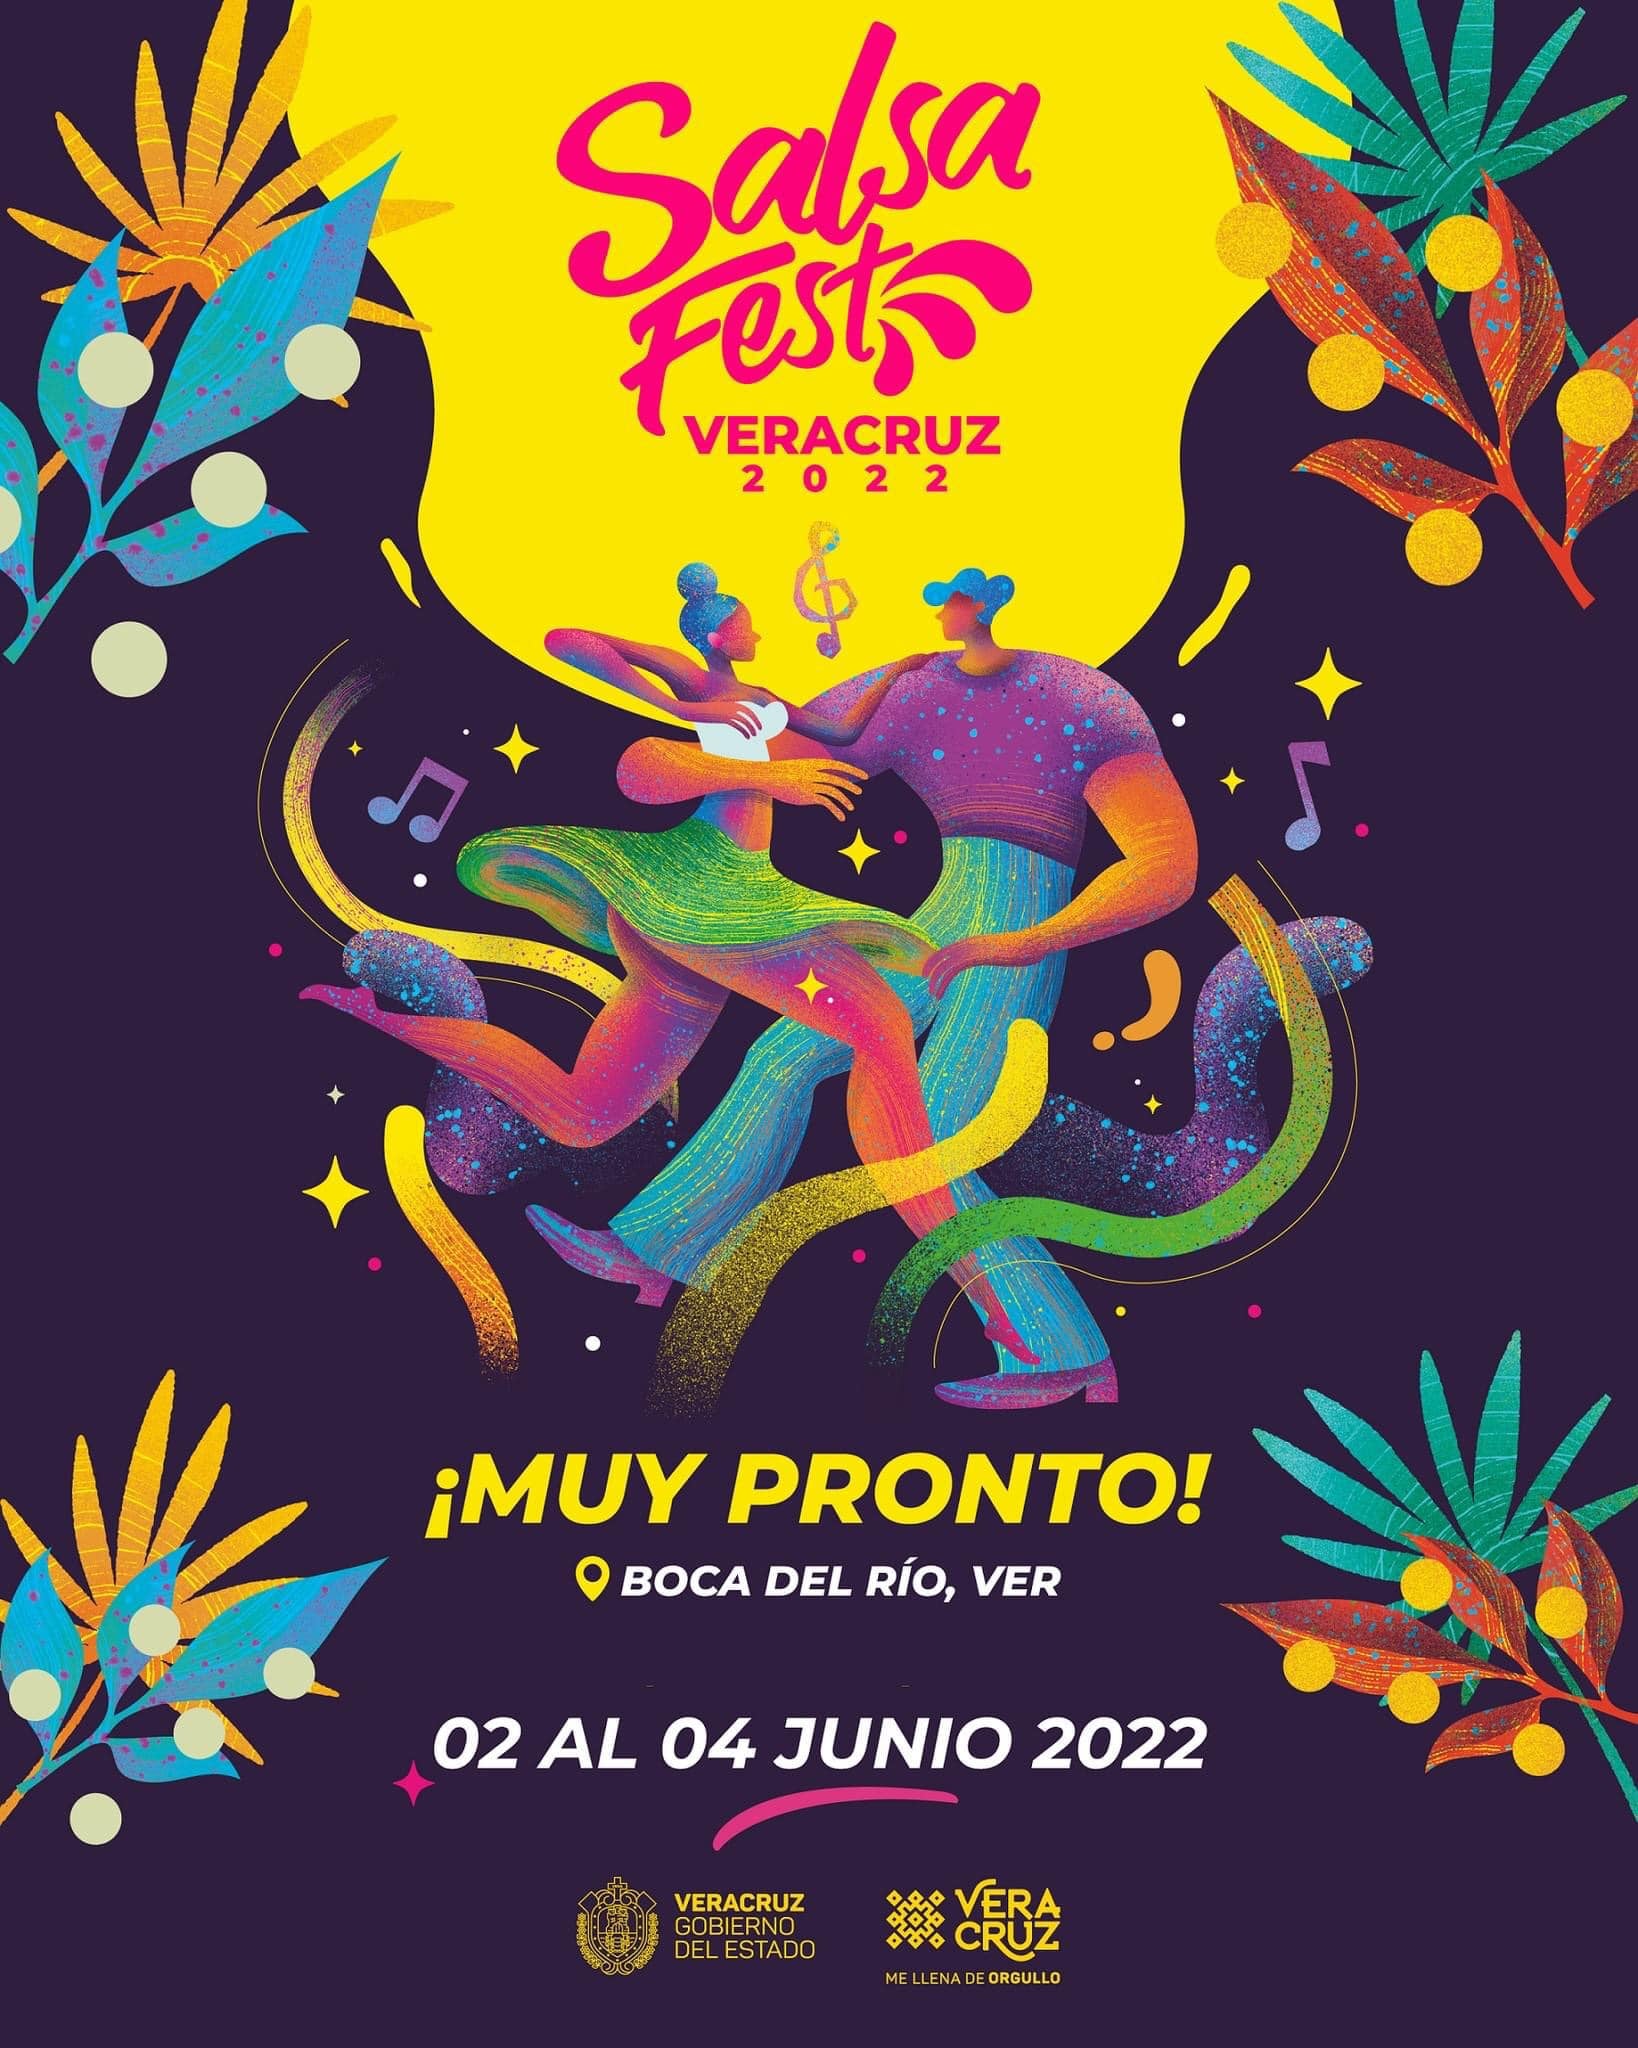 Regresa el Salsa Fest a Veracruz, ¡prepara tus mejores pasos!